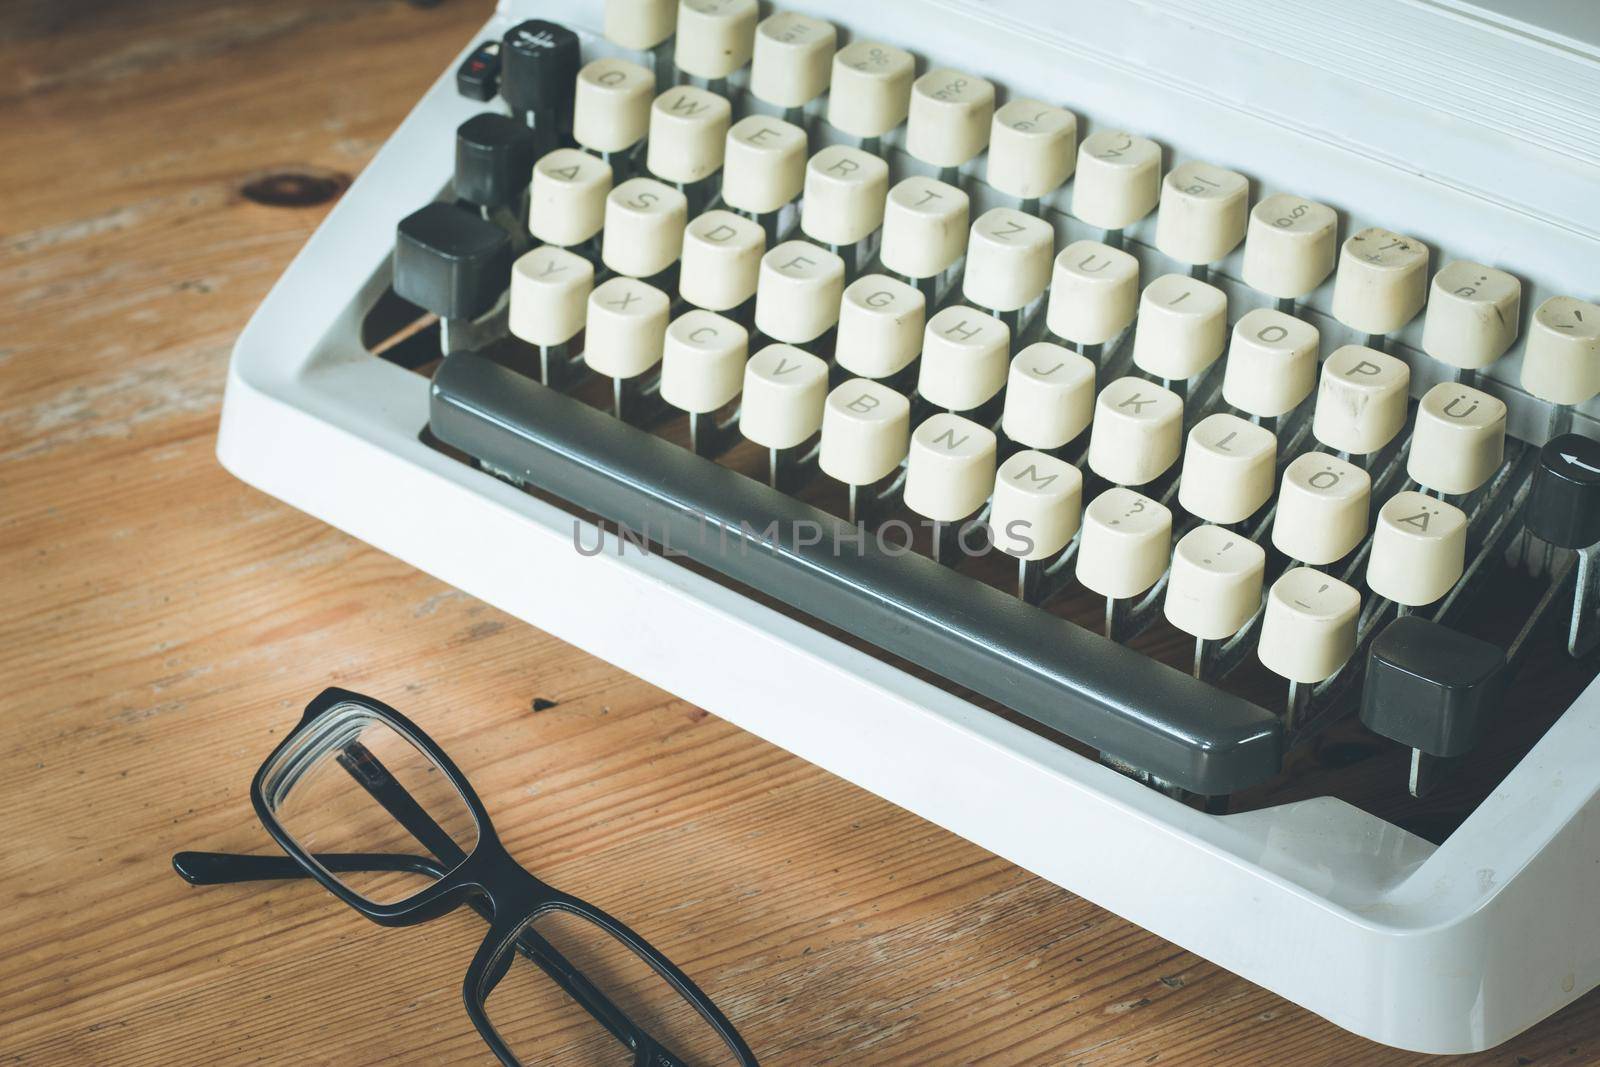 Old fashioned vintage typewriter on wood desk by Daxenbichler